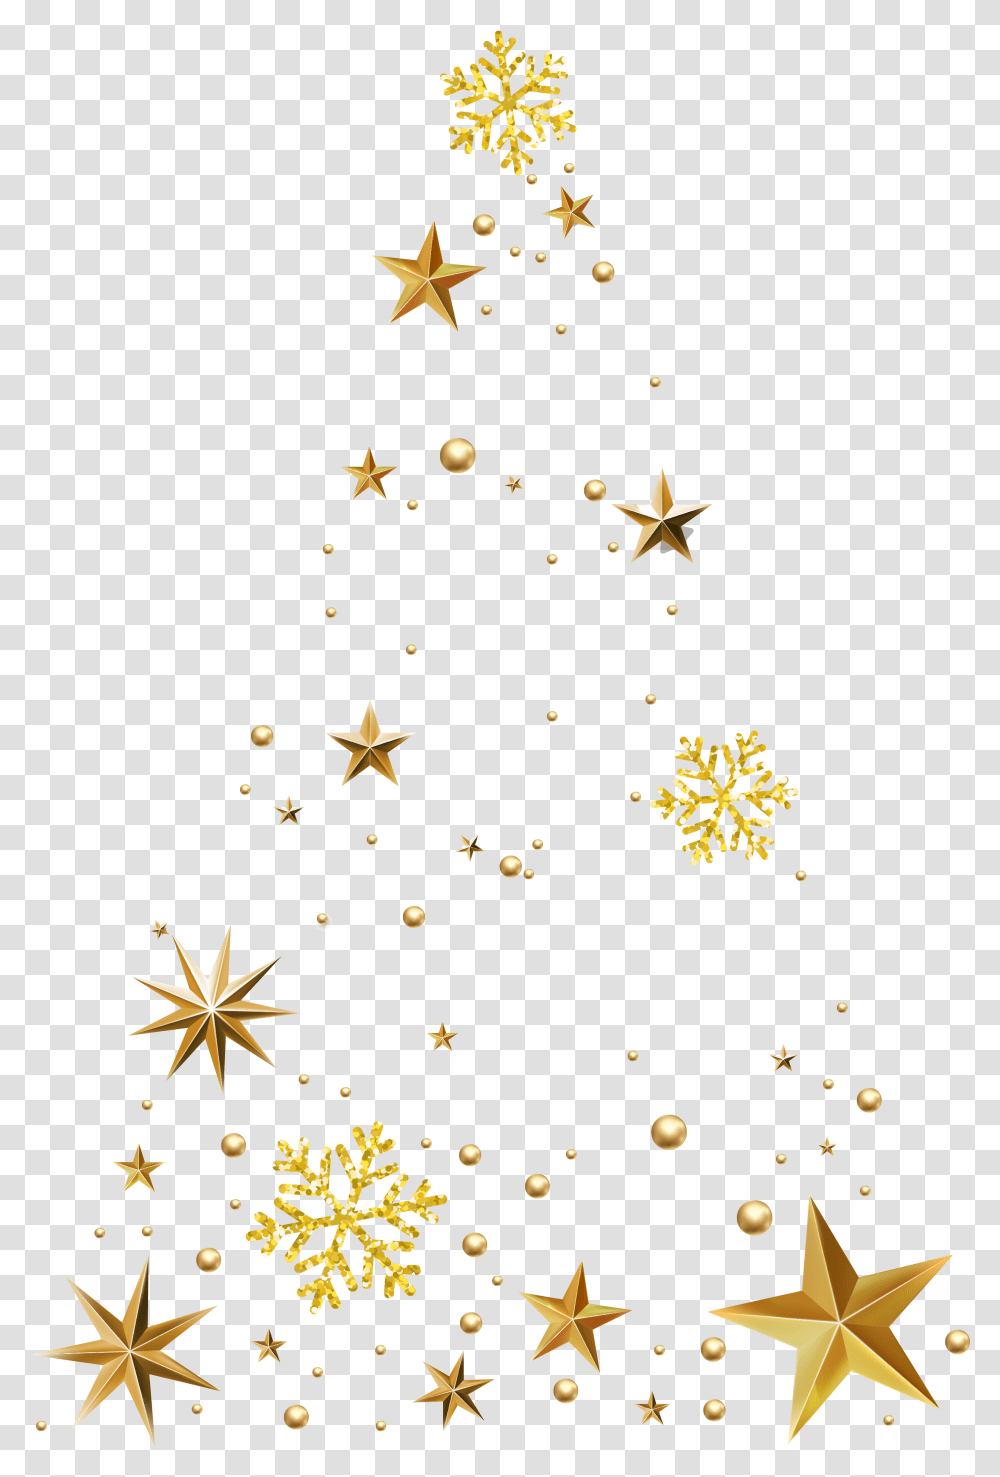 Este Grficos Es Las Estrellas Doradas Decoran El Estrella Doradas Transparente, Christmas Tree, Ornament, Plant Transparent Png